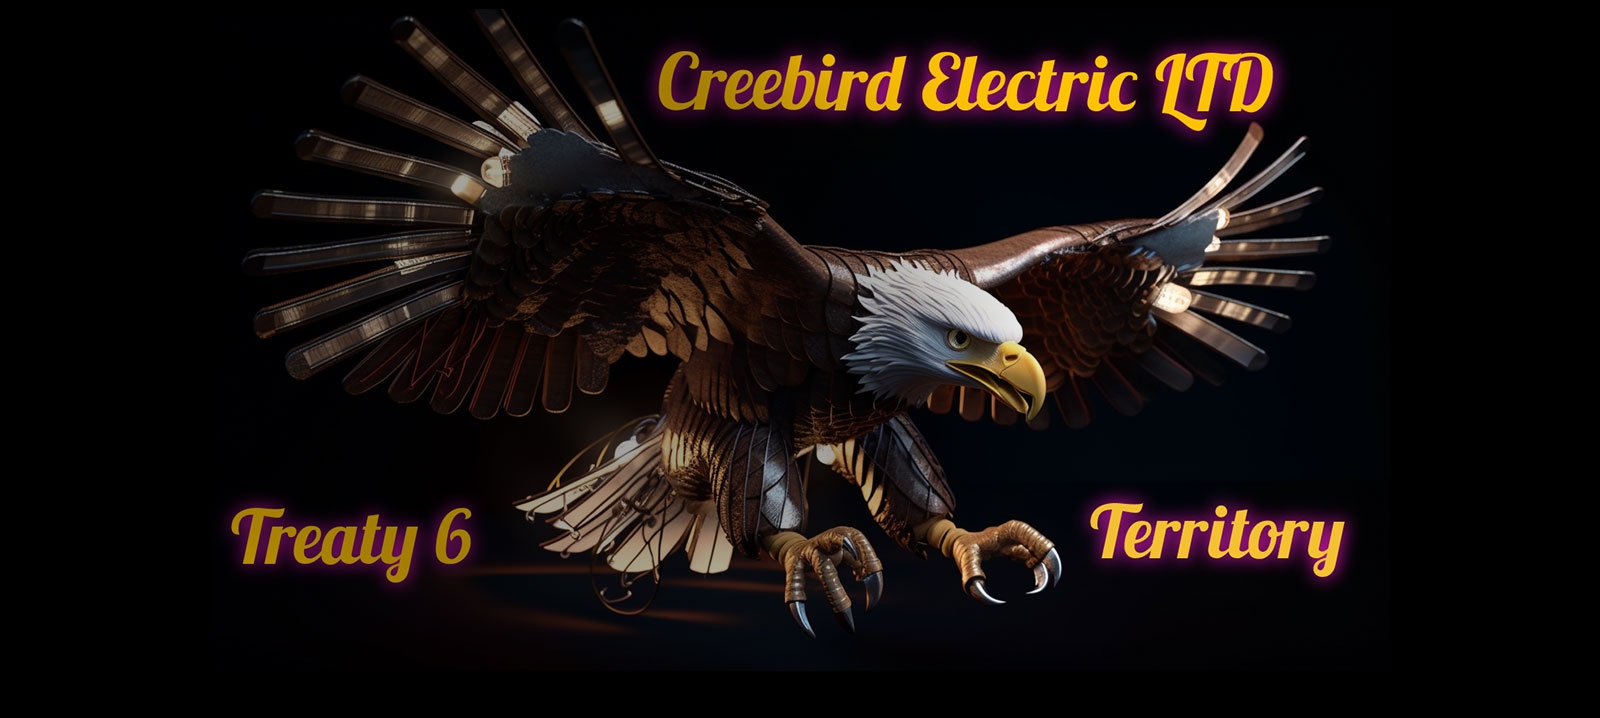  Creebird Electric LTD